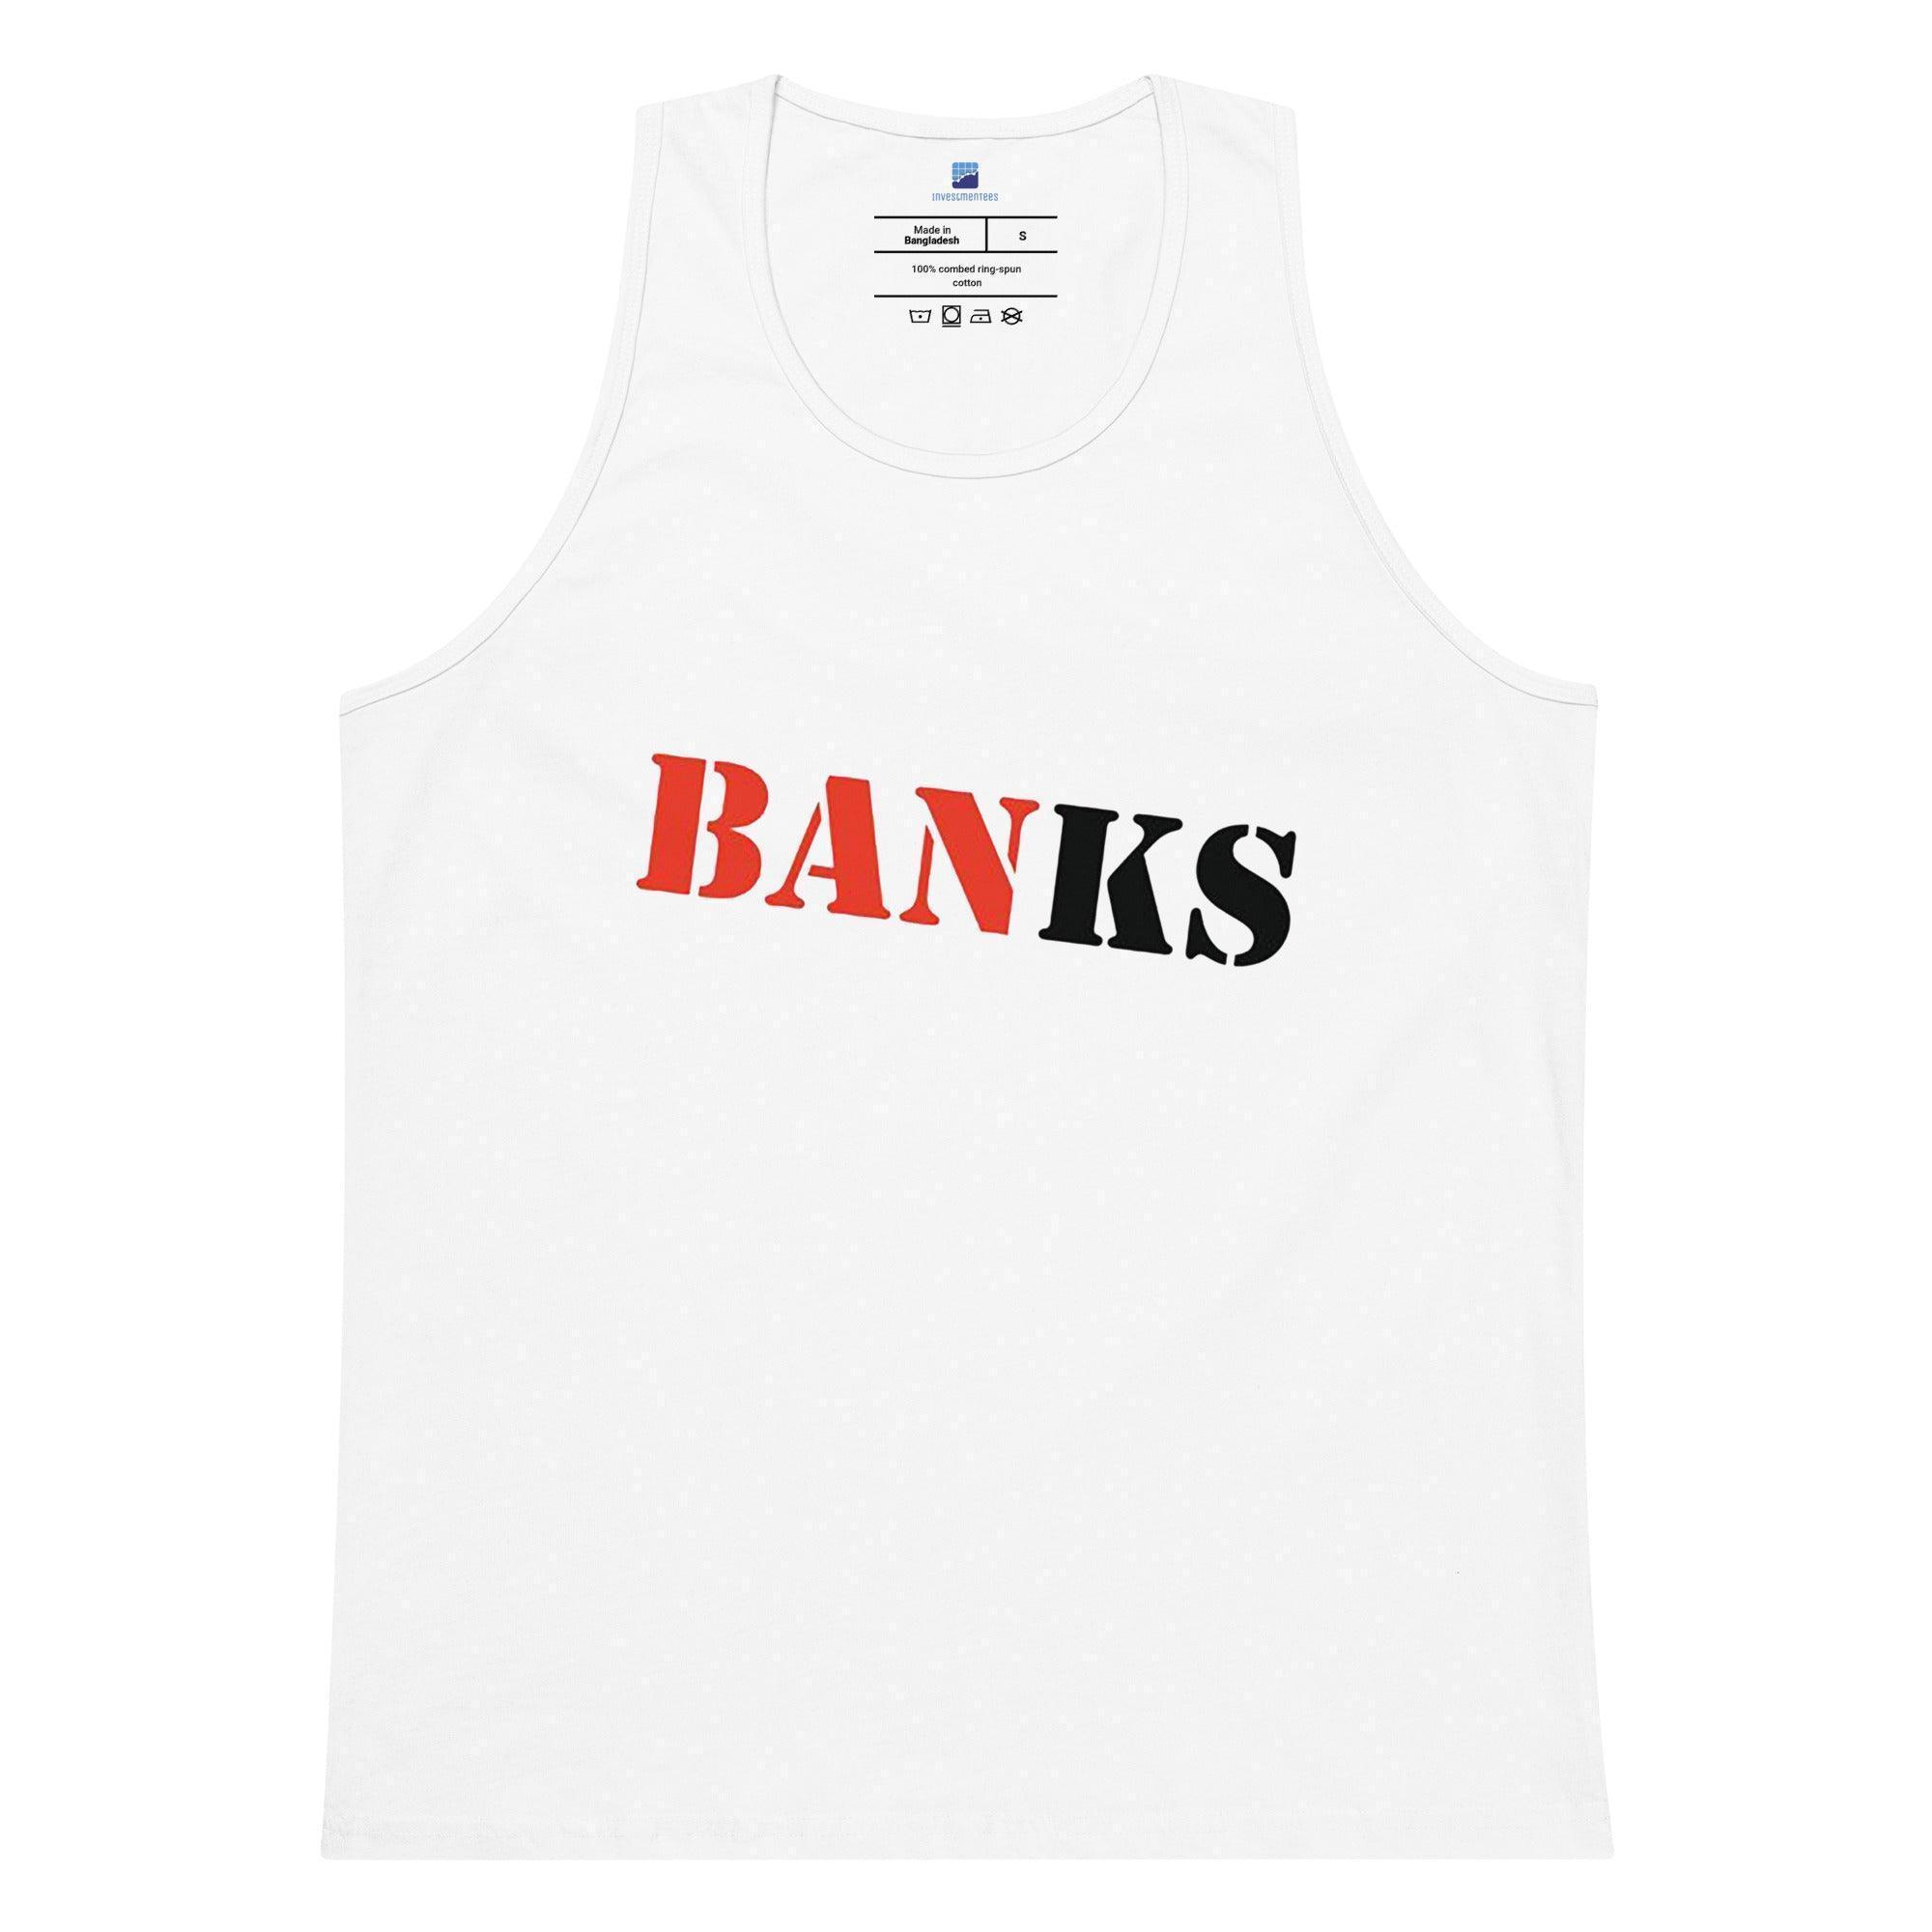 Banks Tank Top - InvestmenTees